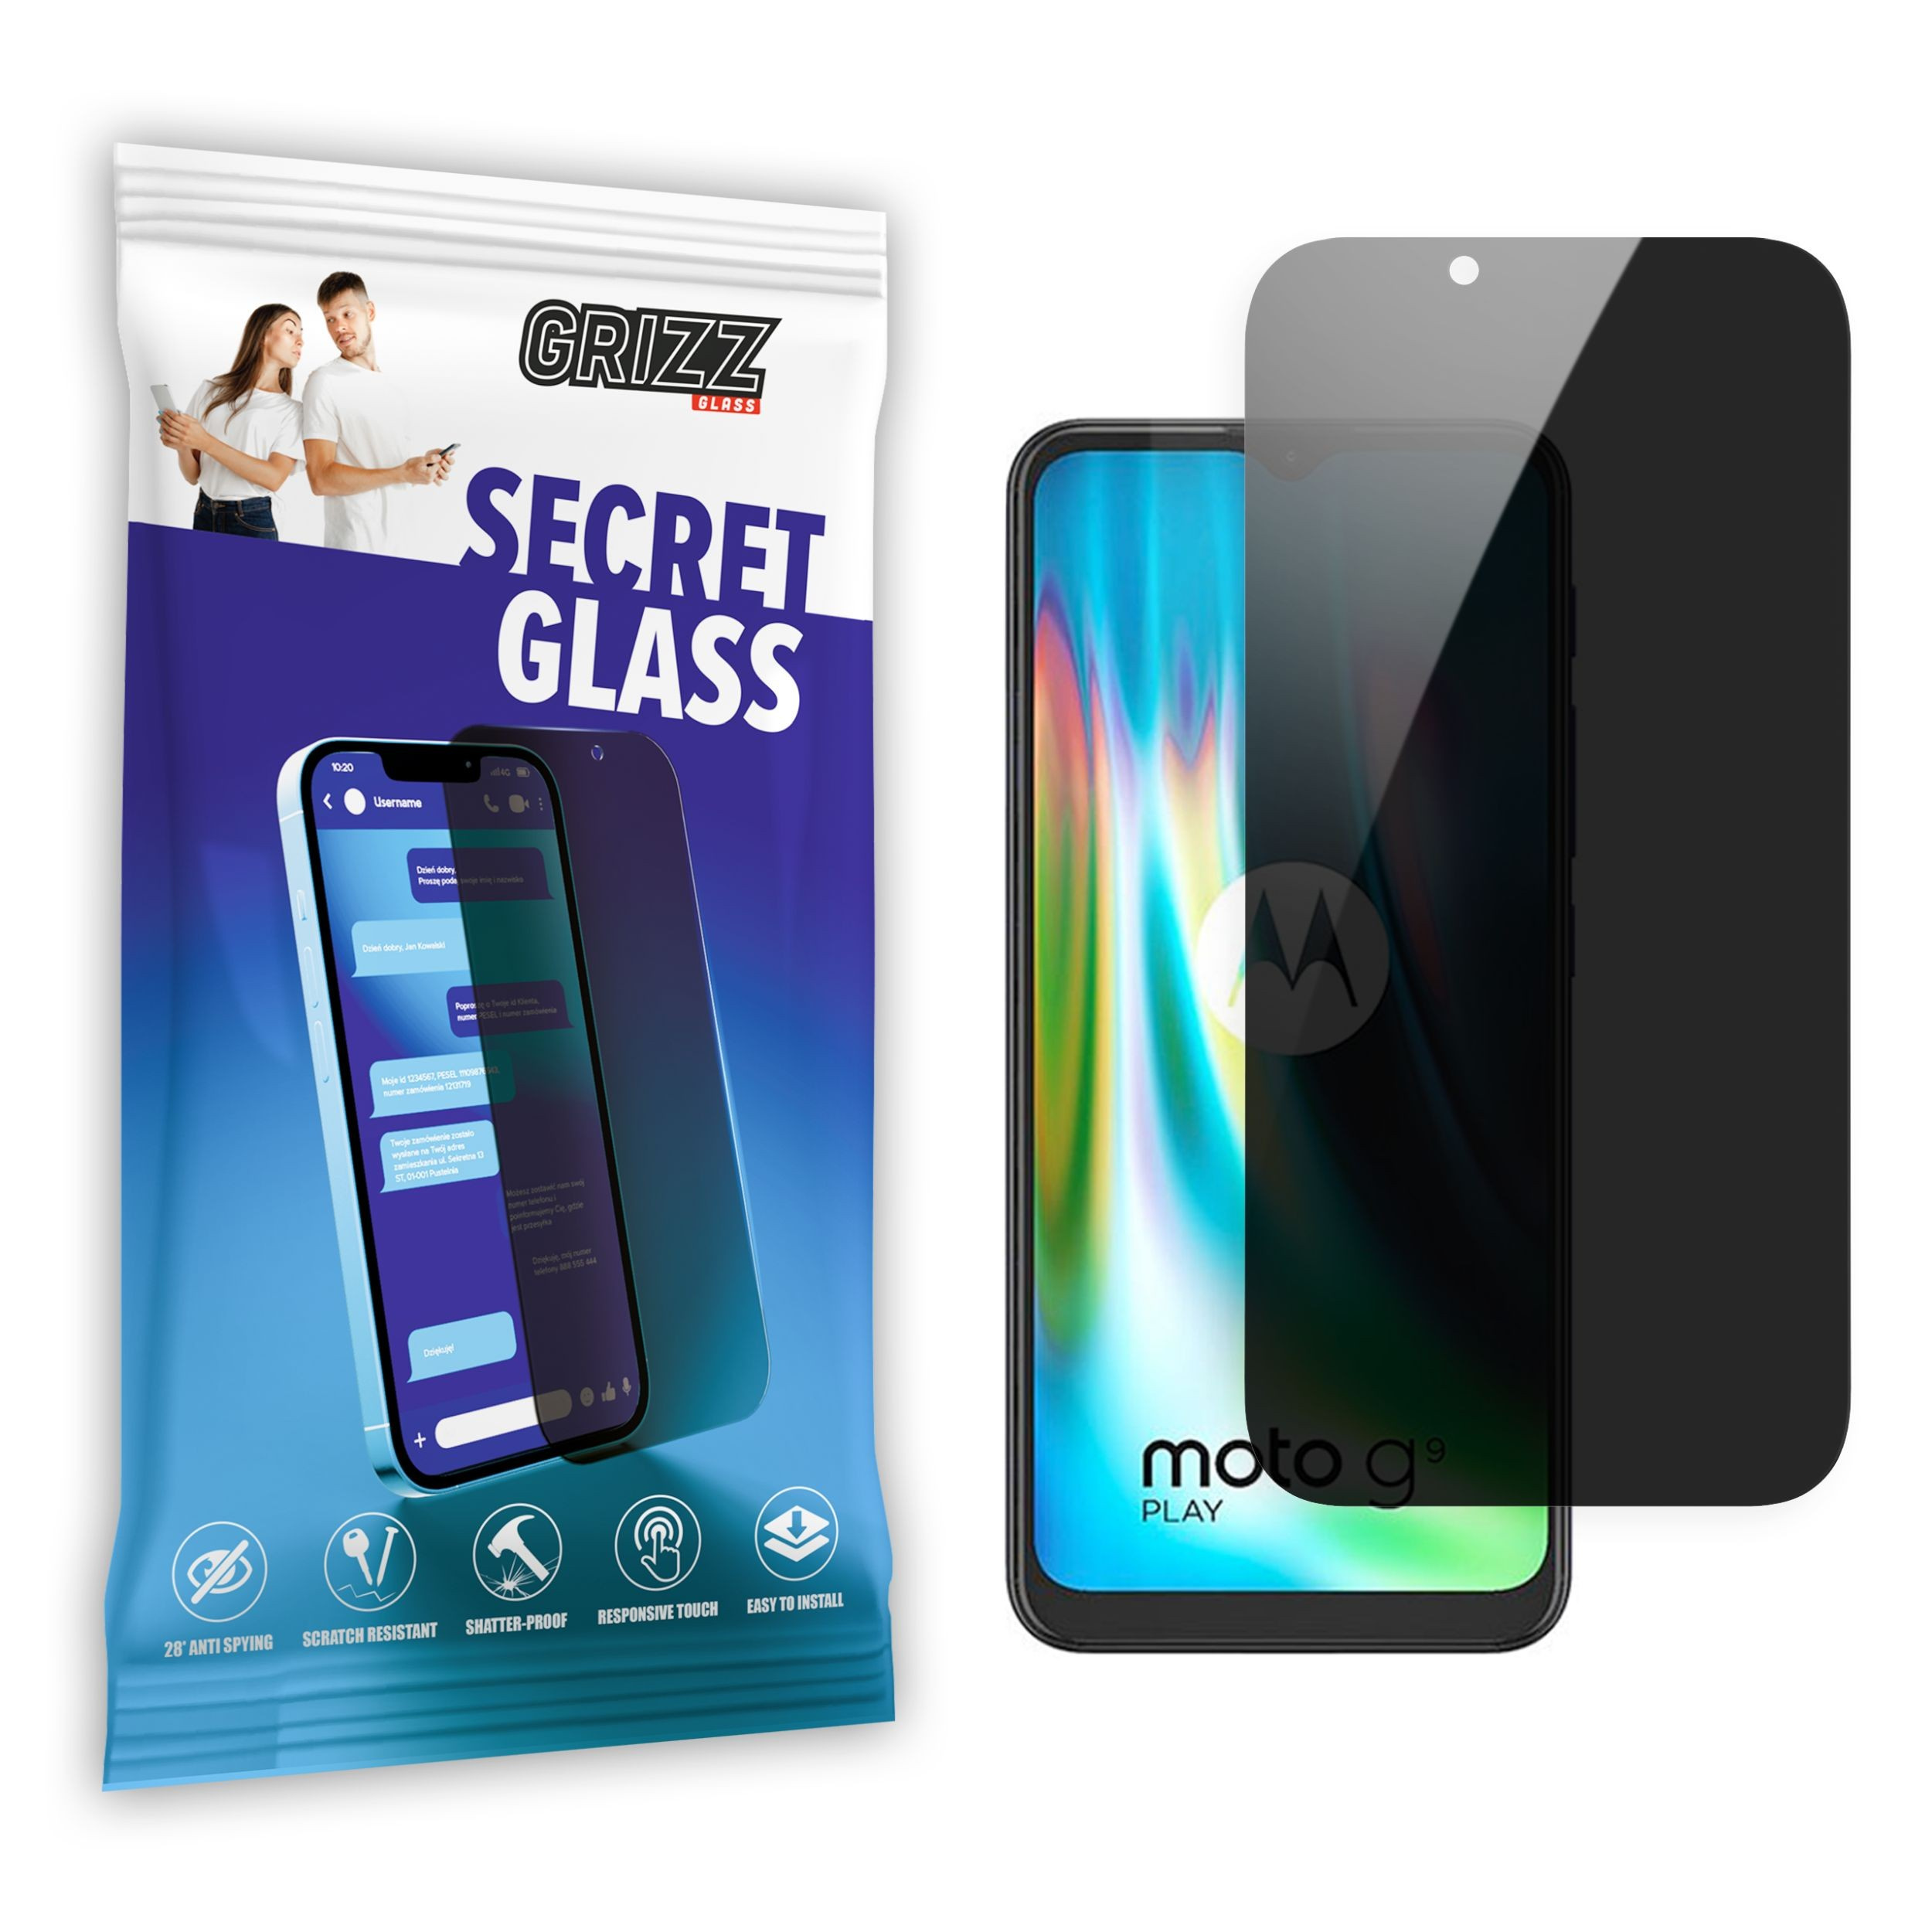 GrizzGlass SecretGlass Motorola Moto G9 Play